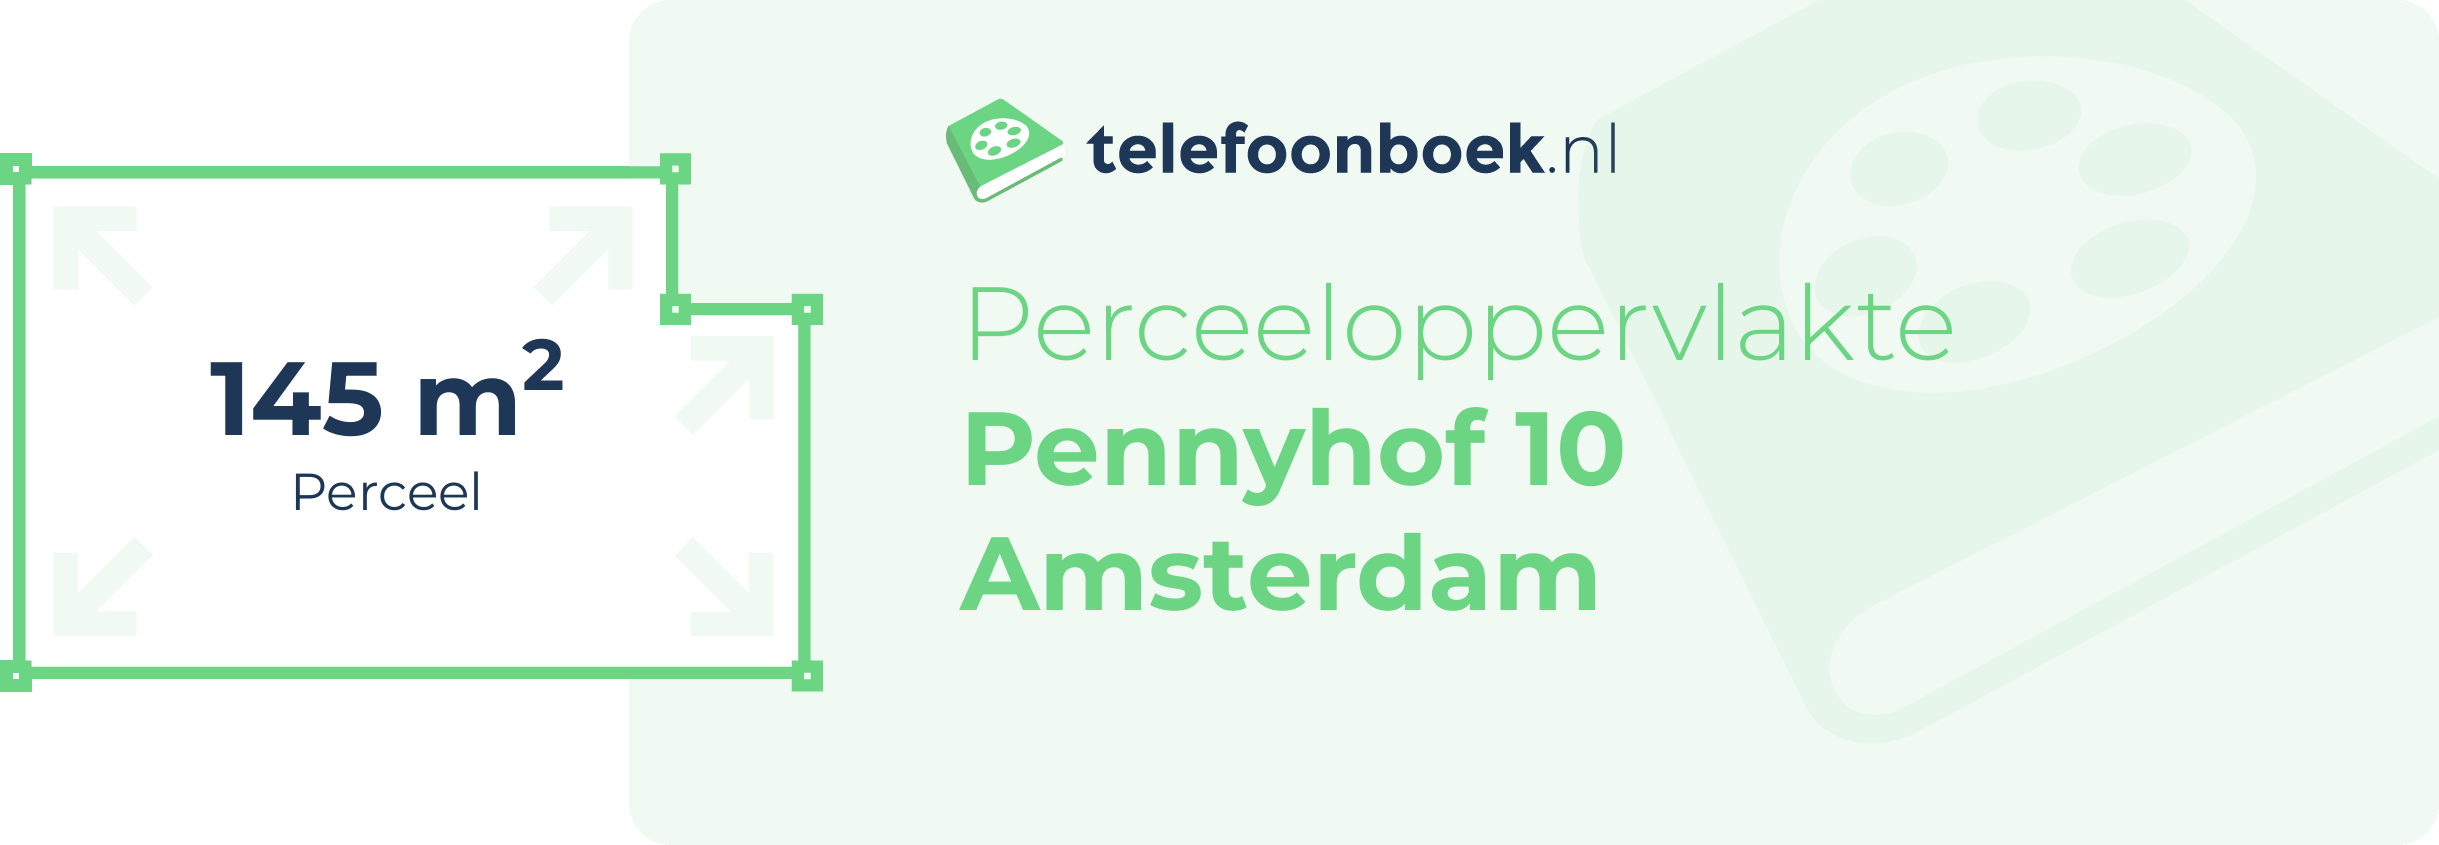 Perceeloppervlakte Pennyhof 10 Amsterdam